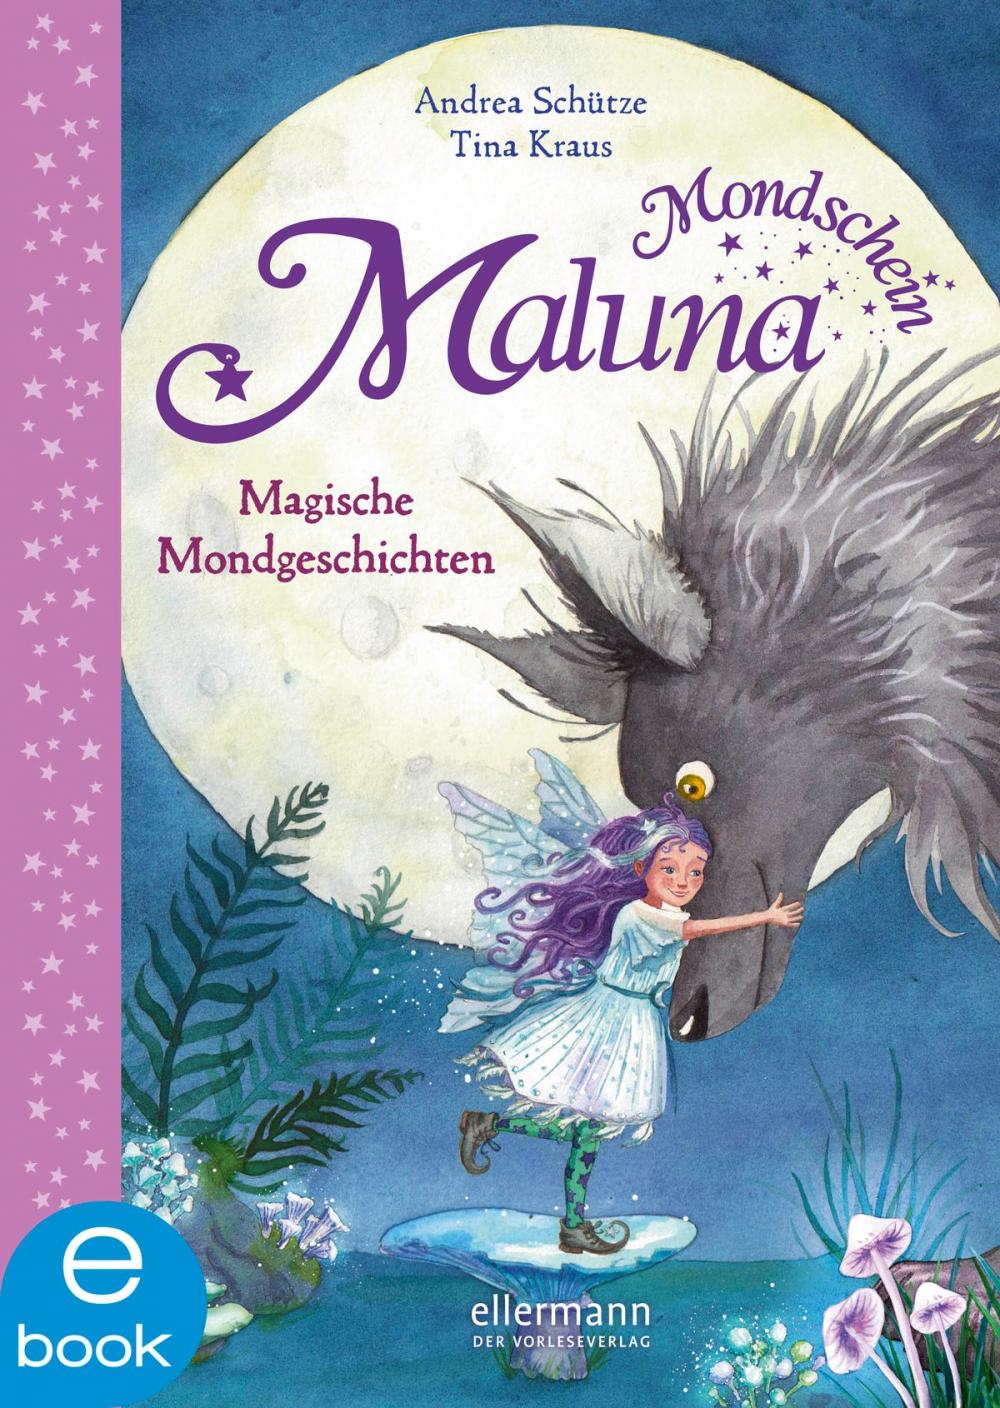 Big bigCover of Maluna Mondschein - Magische Mondgeschichten